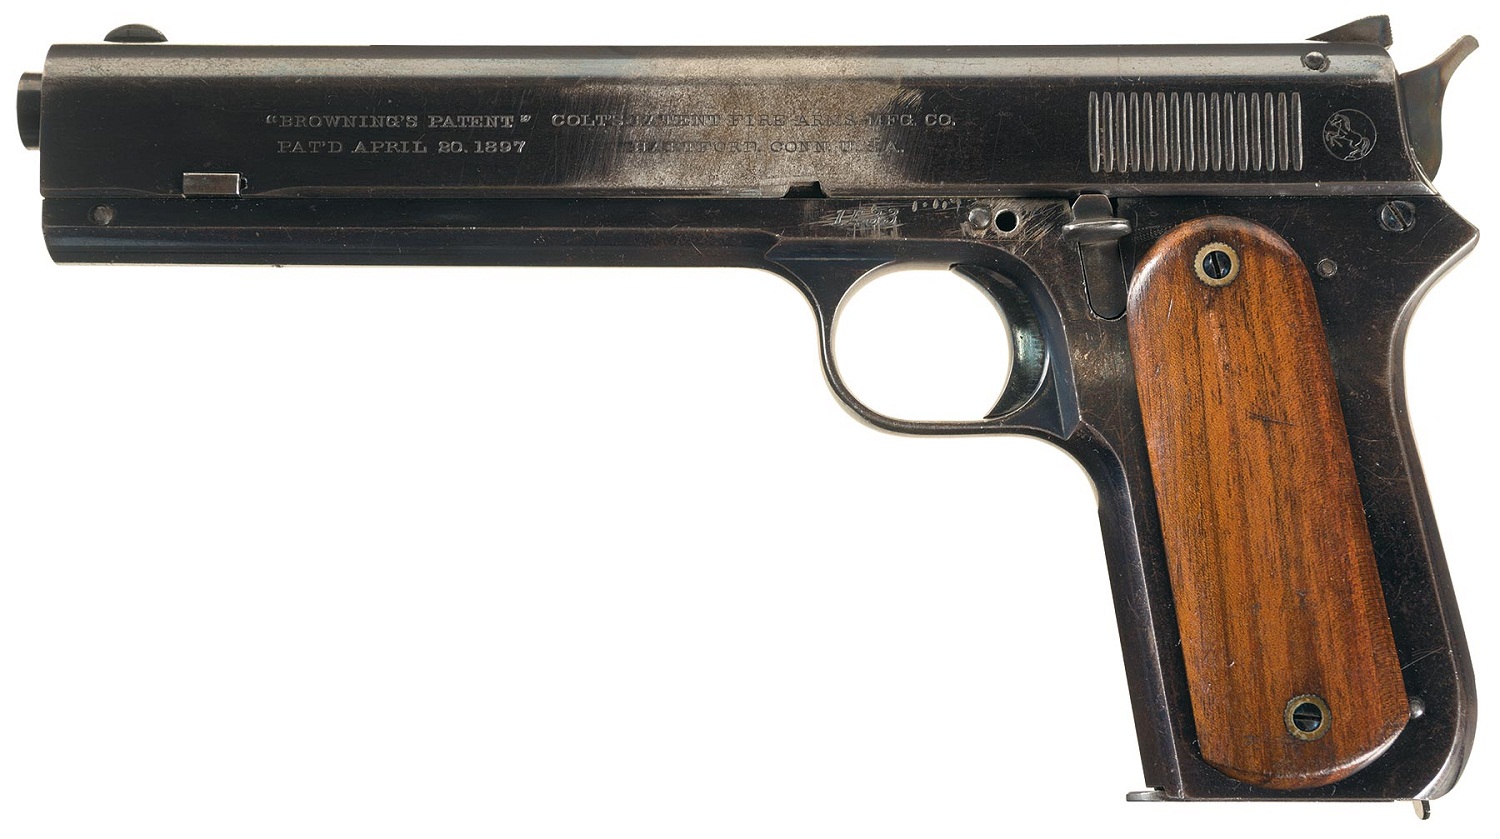 Prototype slide stop The Colt Model 1900